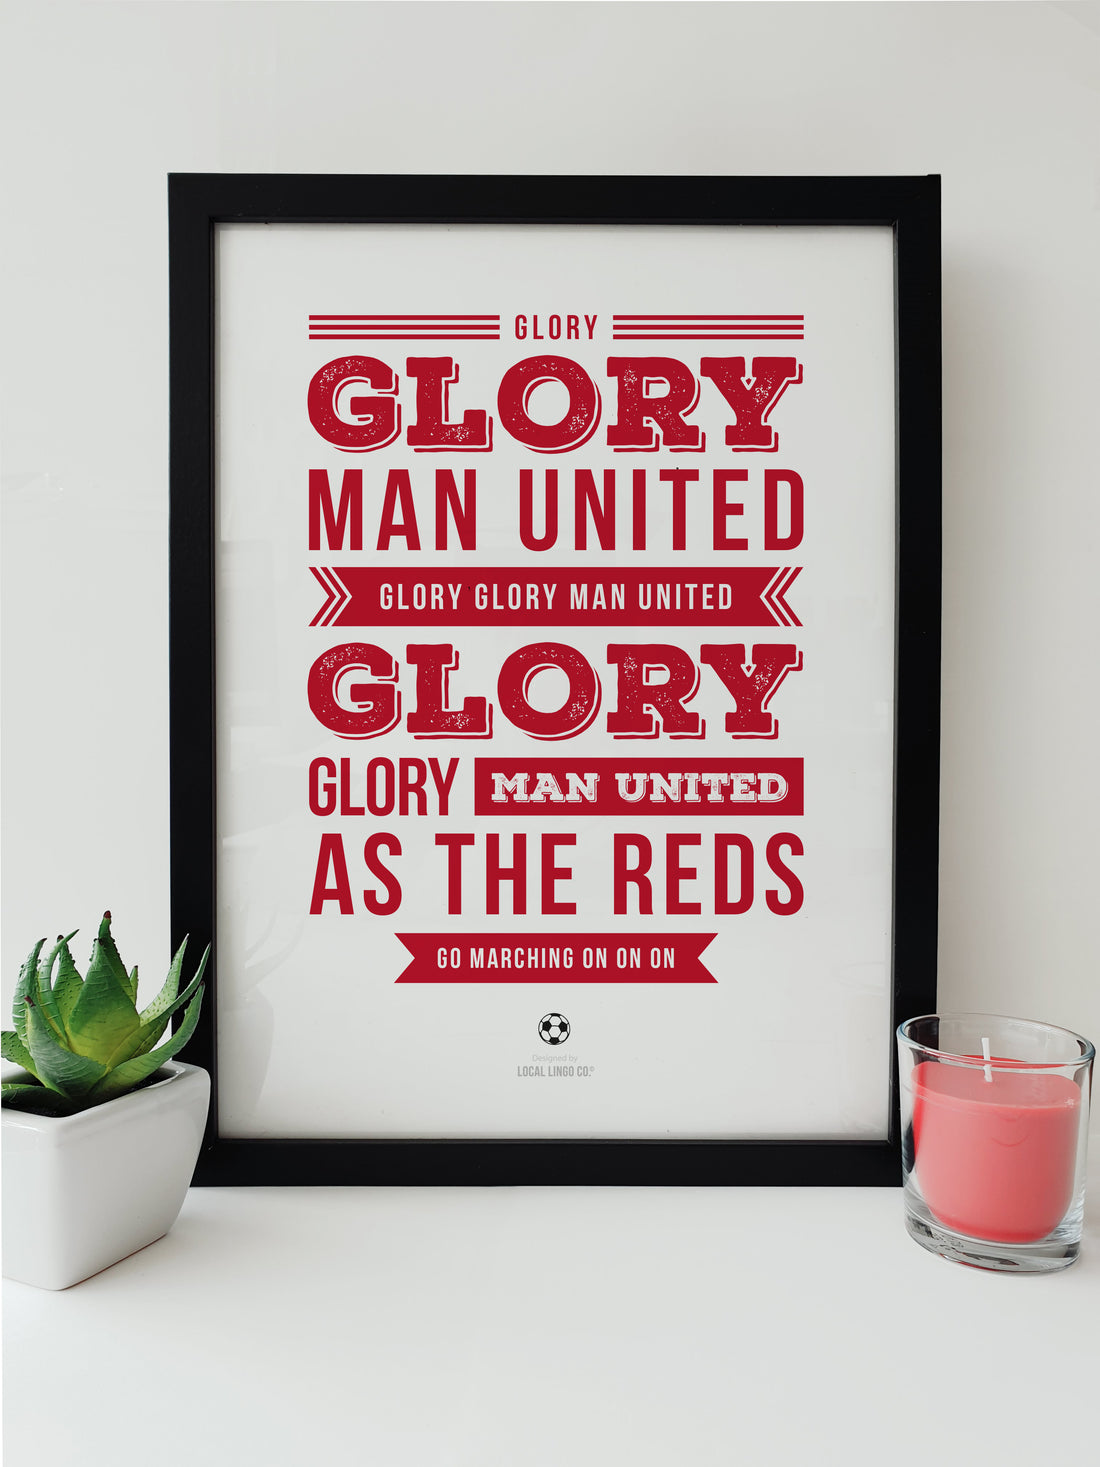 Glory Glory Man United football fan chant lyrics Manchester supporter gift Local Lingo print